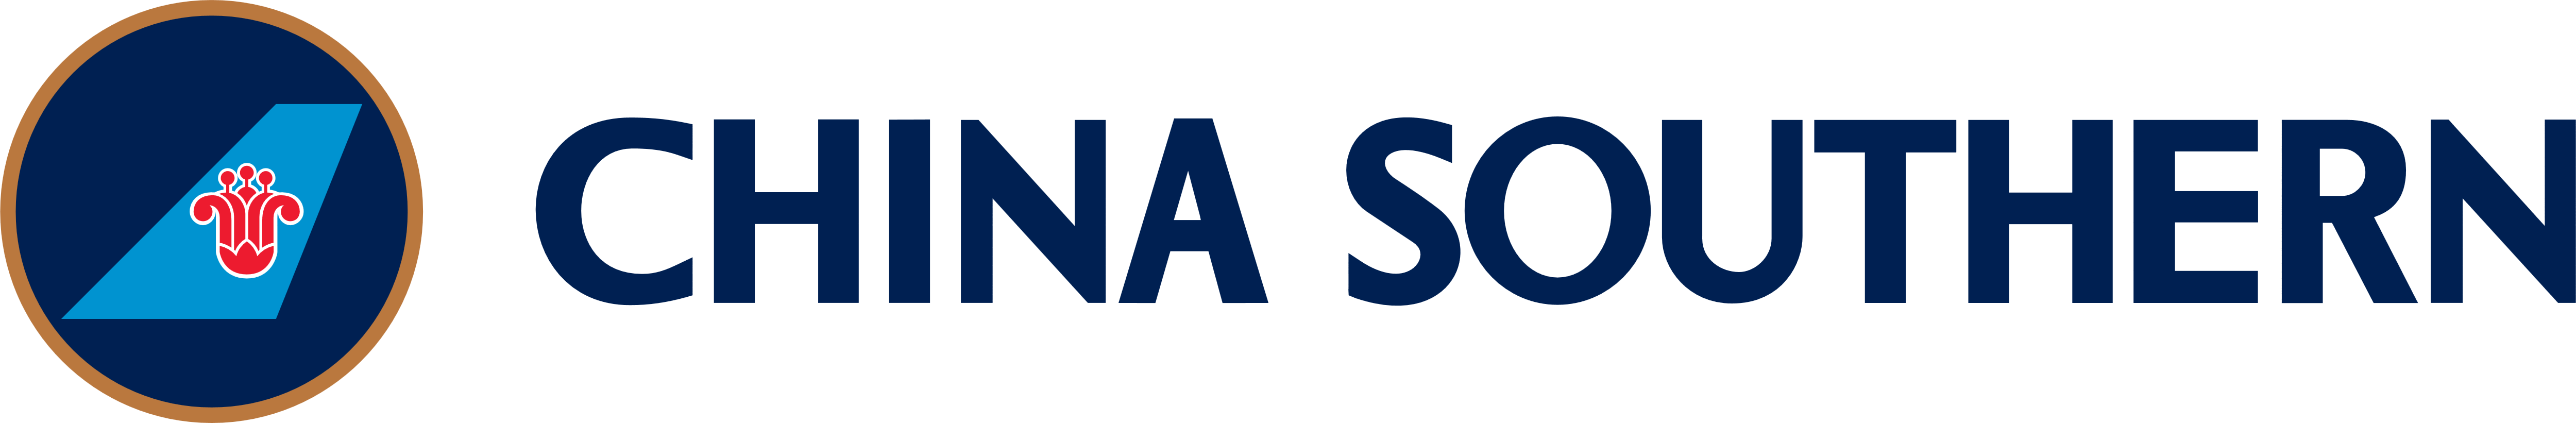 China Southern Airlines logo emblem logotype 2